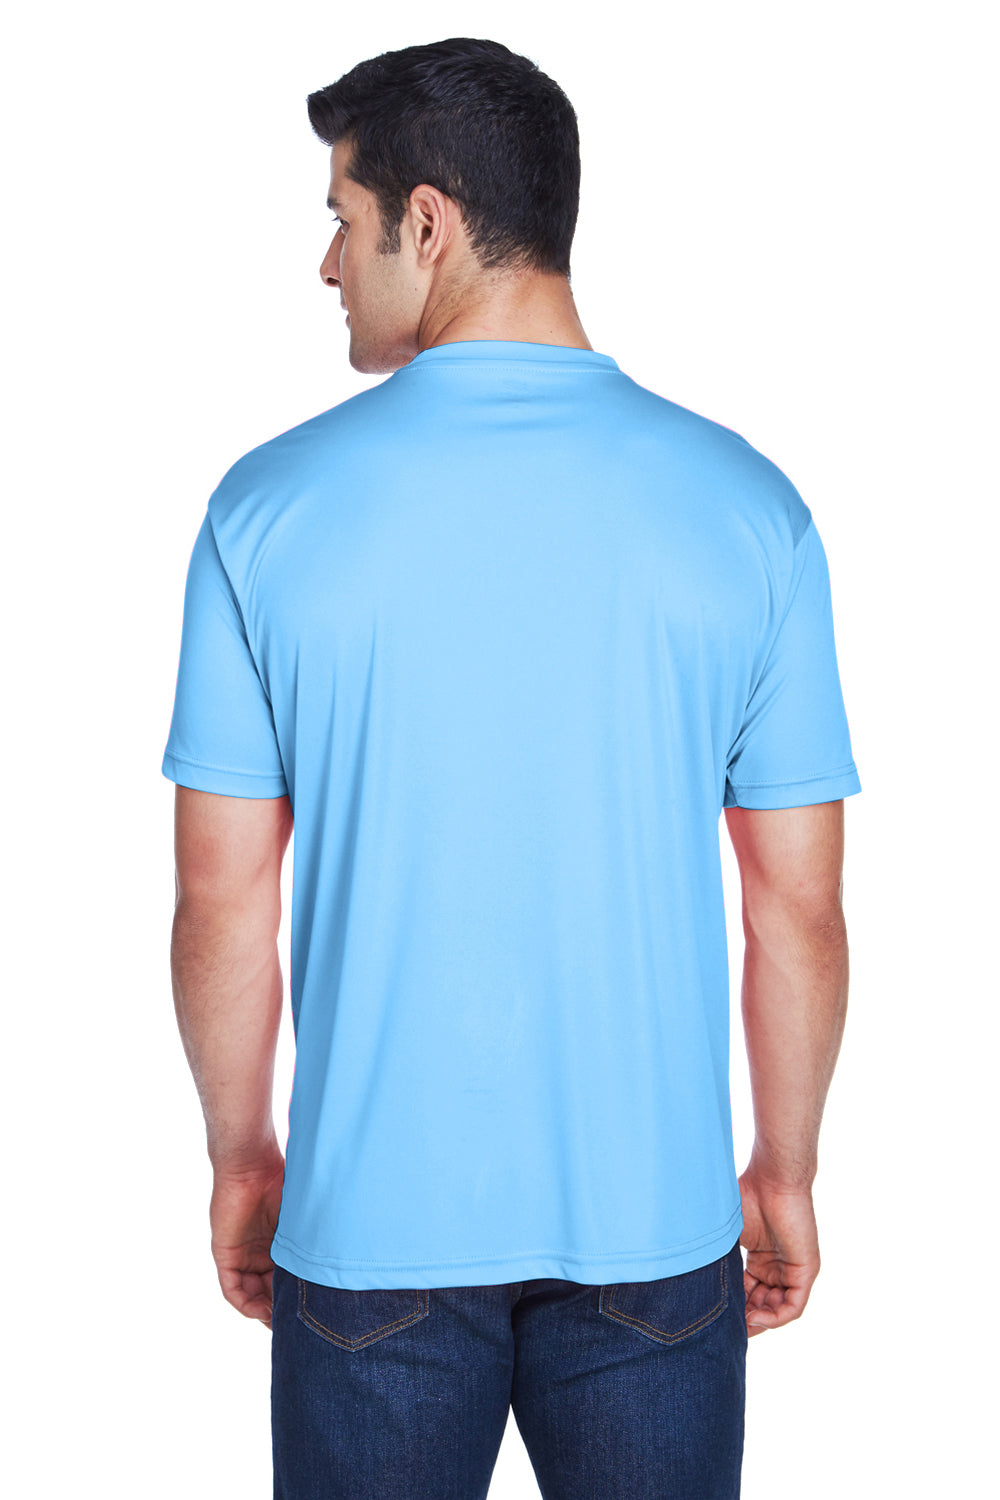 UltraClub 8420 Mens Cool & Dry Performance Moisture Wicking Short Sleeve Crewneck T-Shirt Columbia Blue Back